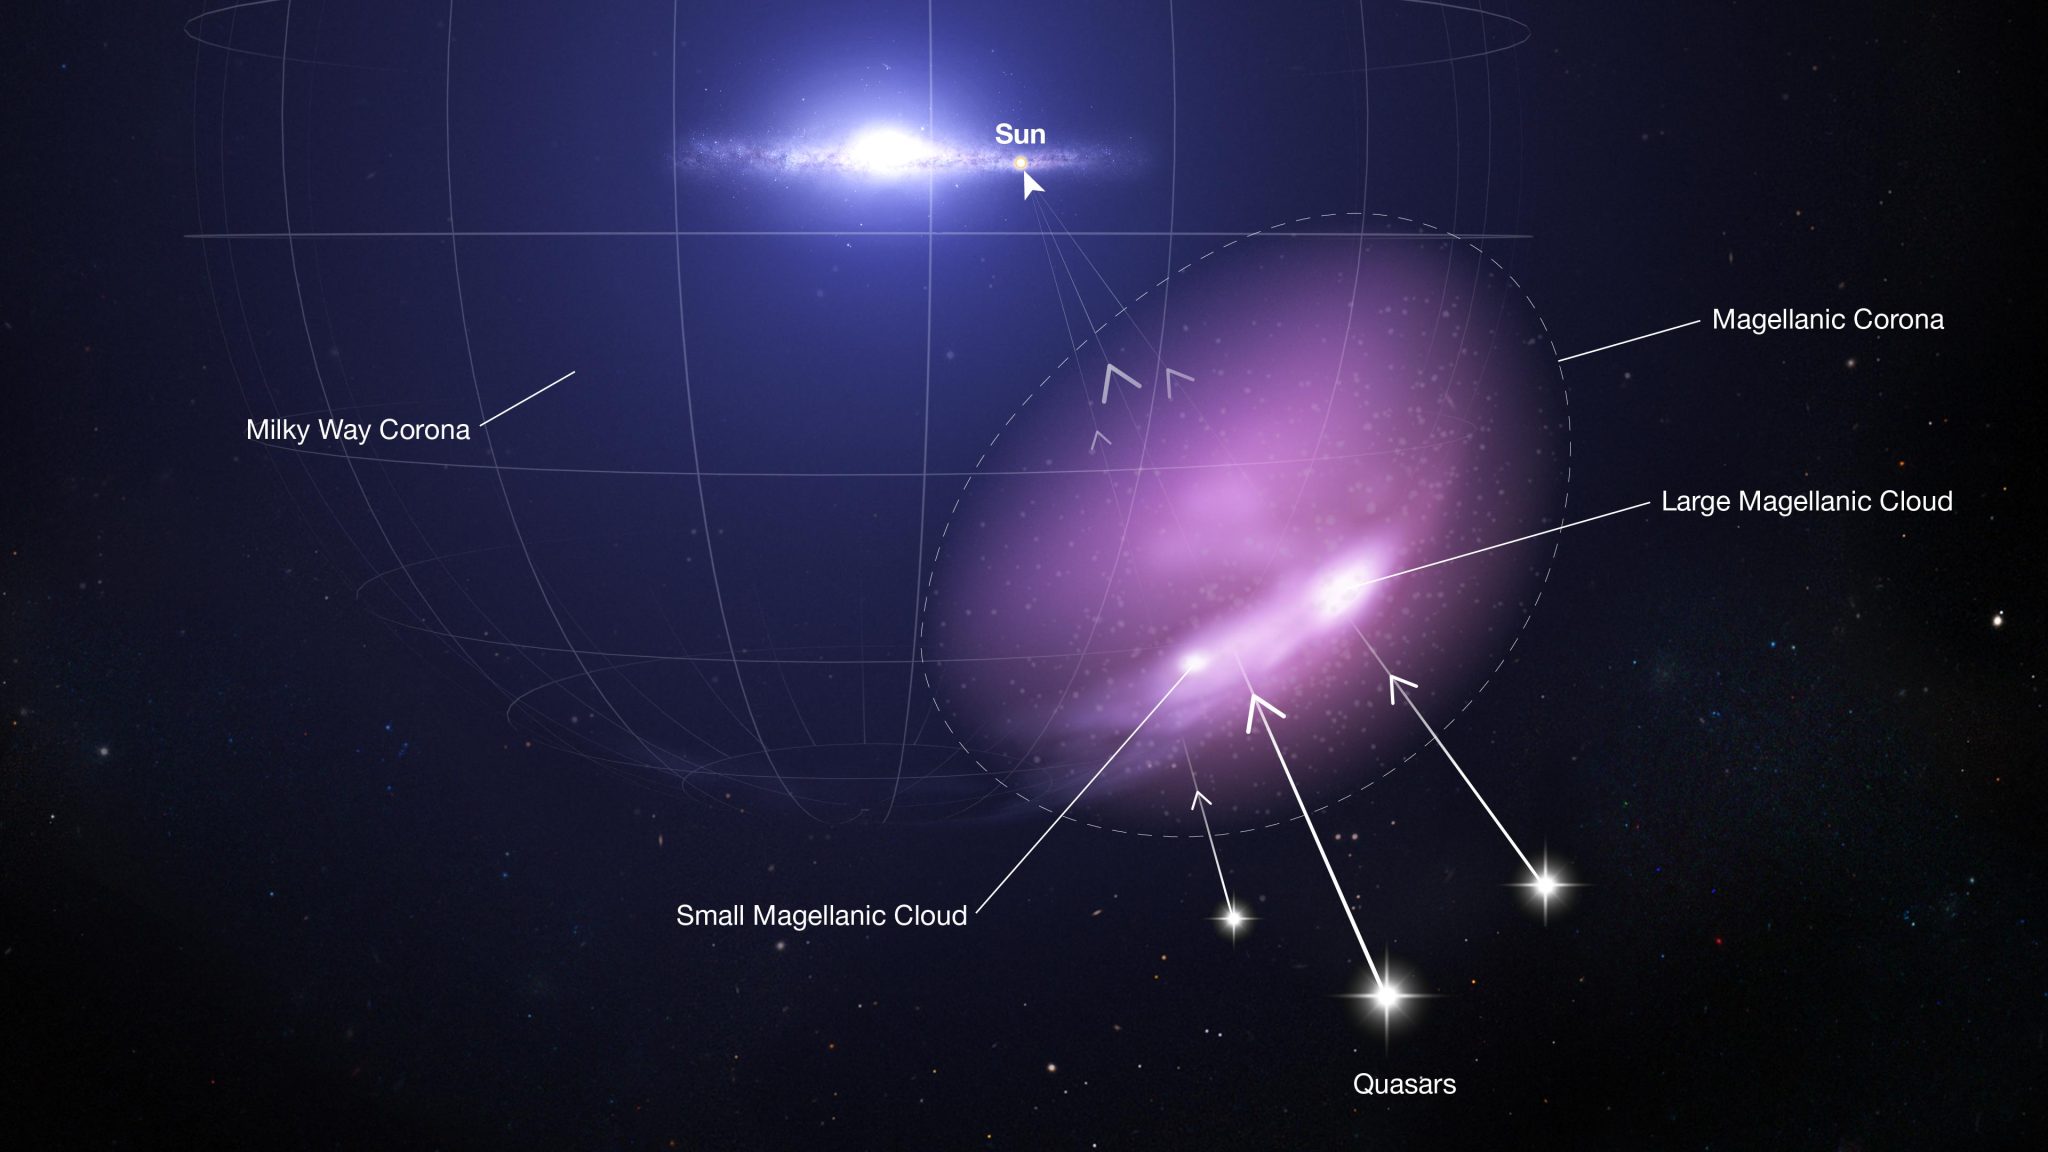 Using quasars to map the Magellanic corona